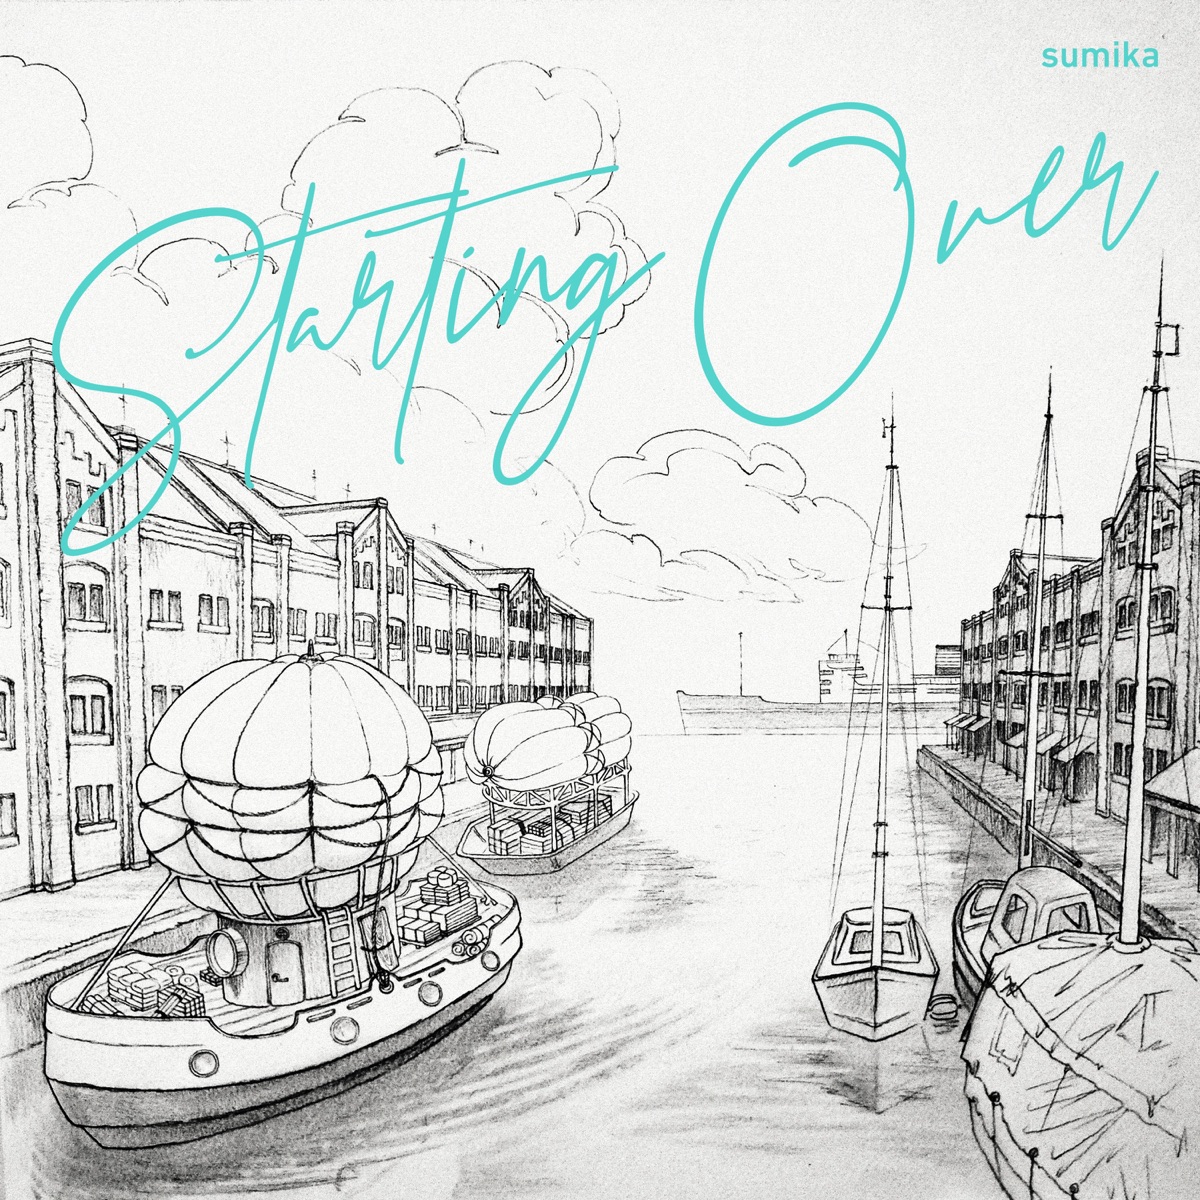 『sumika - Starting Over』収録の『Starting Over』ジャケット